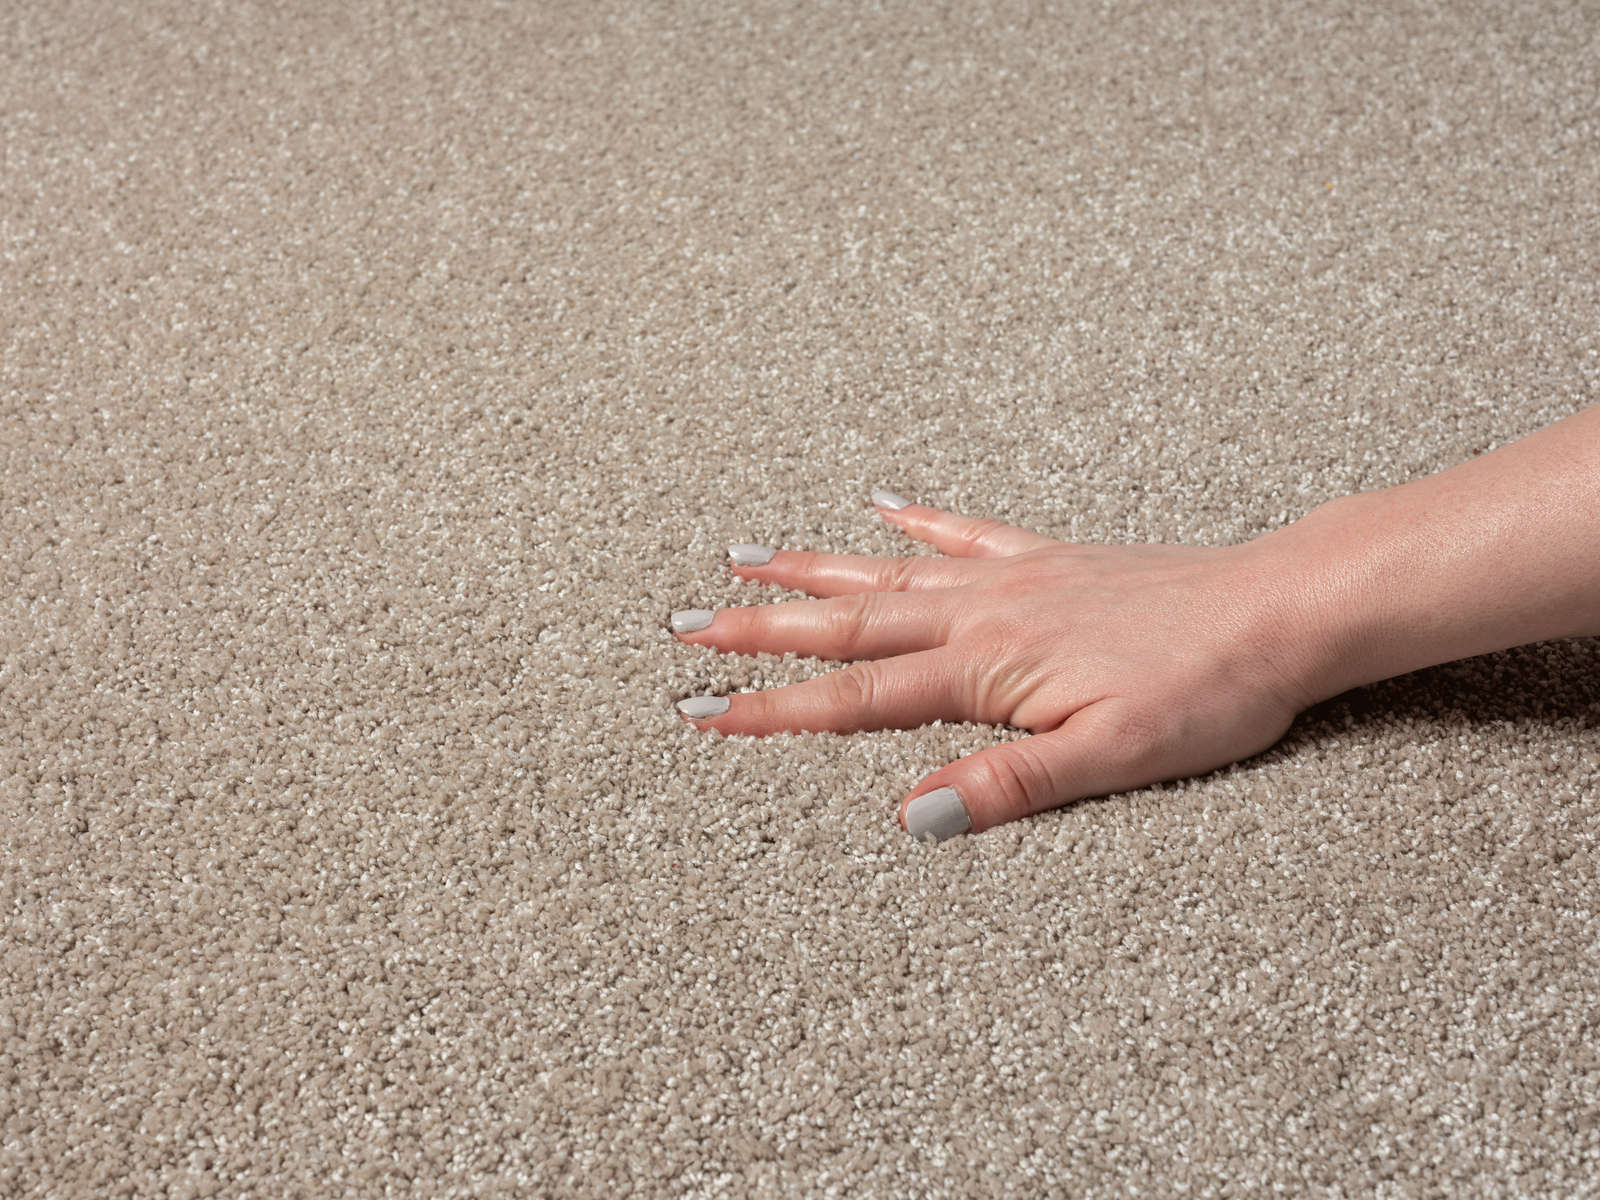             Soft short pile carpet in beige - 200 x 140 cm
        